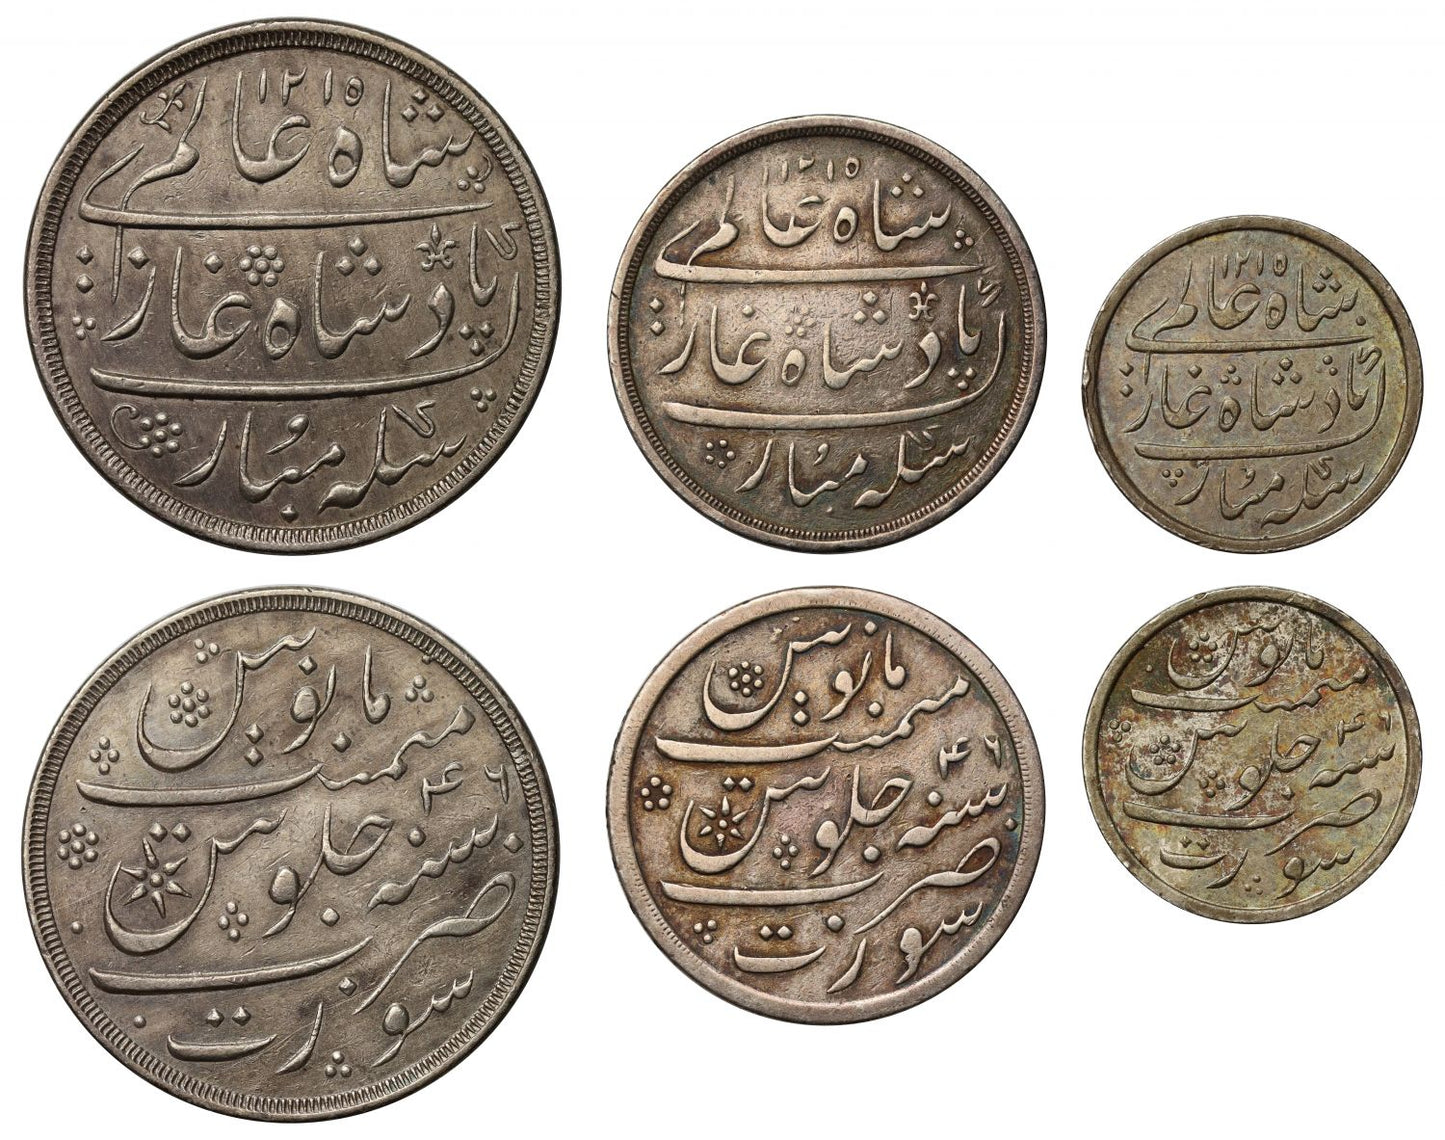 EIC, Bombay Presidency, silver Rupee, Half-Rupee and Quarter-Rupee, 1832-5 machine-struck issue.